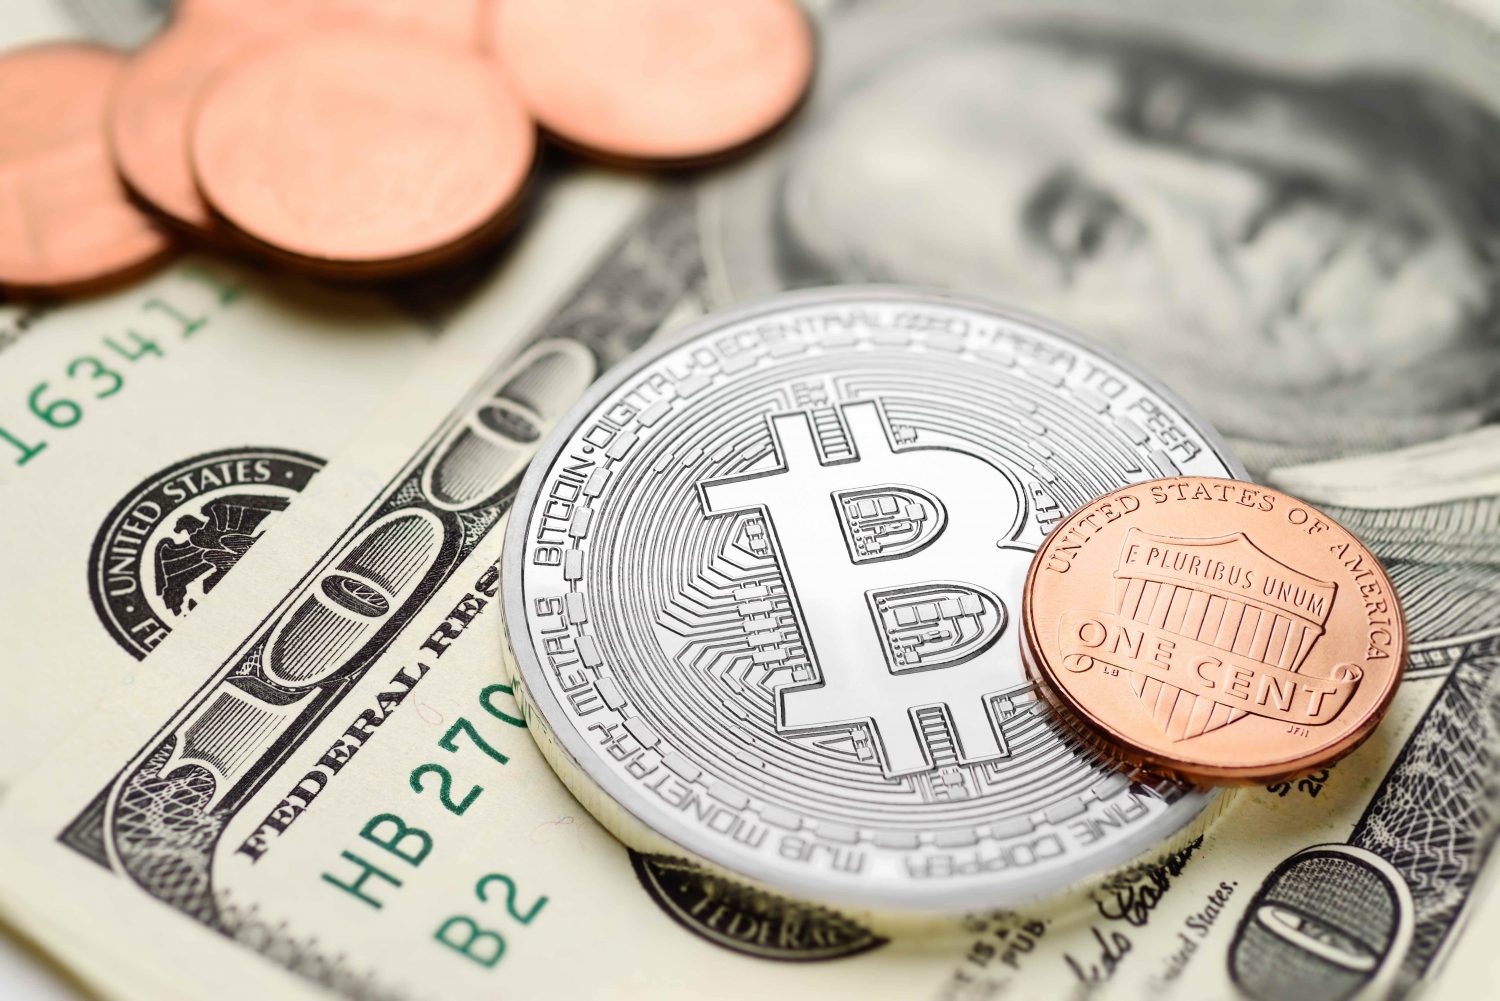 Arizona Bitcoin Bill to Make Legal Tender